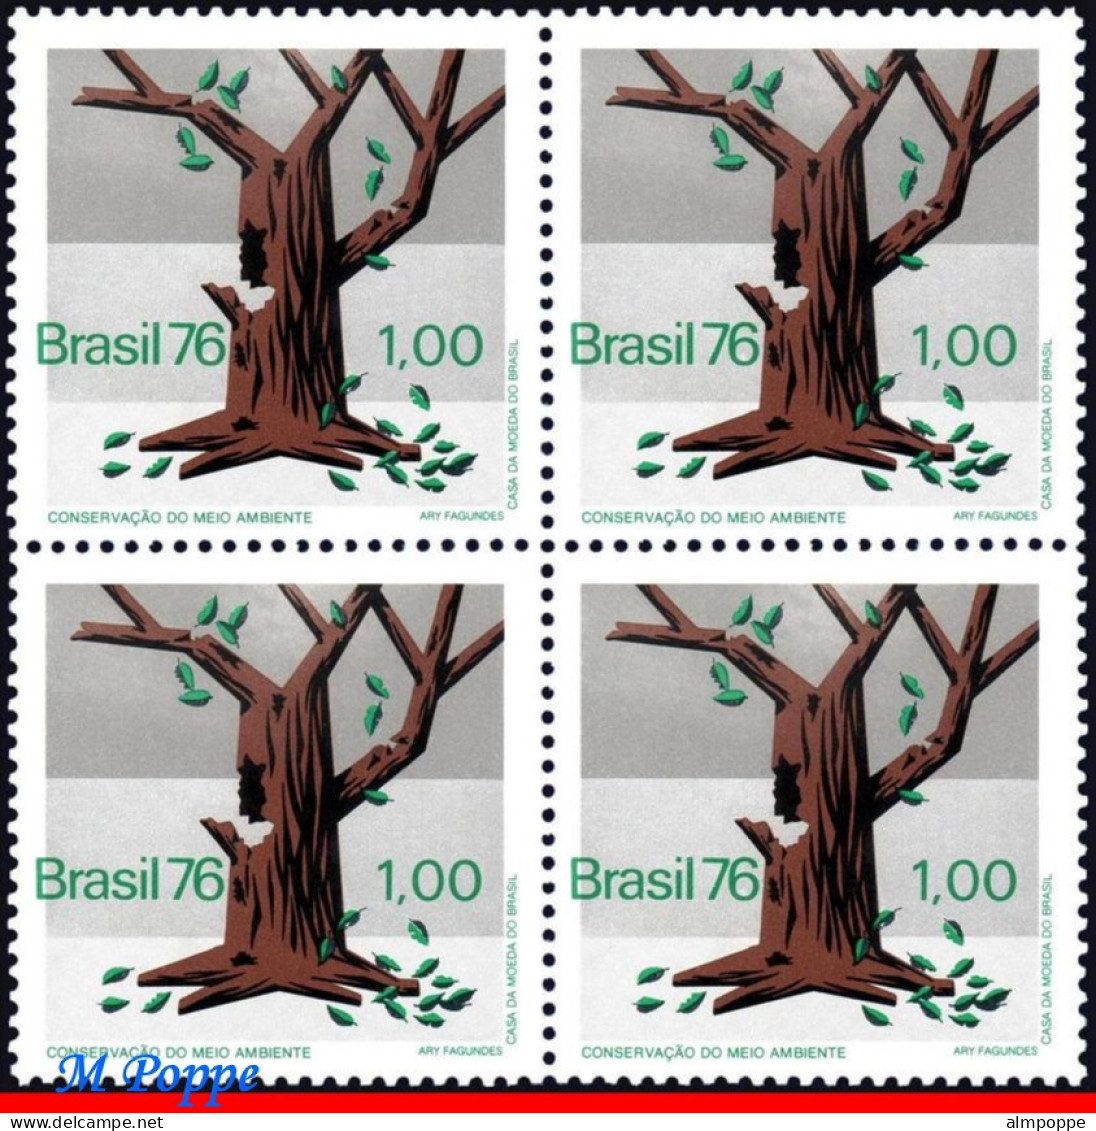 Ref. BR-1474-Q BRAZIL 1976 - PROTECTION OF ENVIRONMENT, DYING TREE, MI# 1559, BLOCK MNH, NATURE 4V Sc# 1474 - Blocks & Kleinbögen